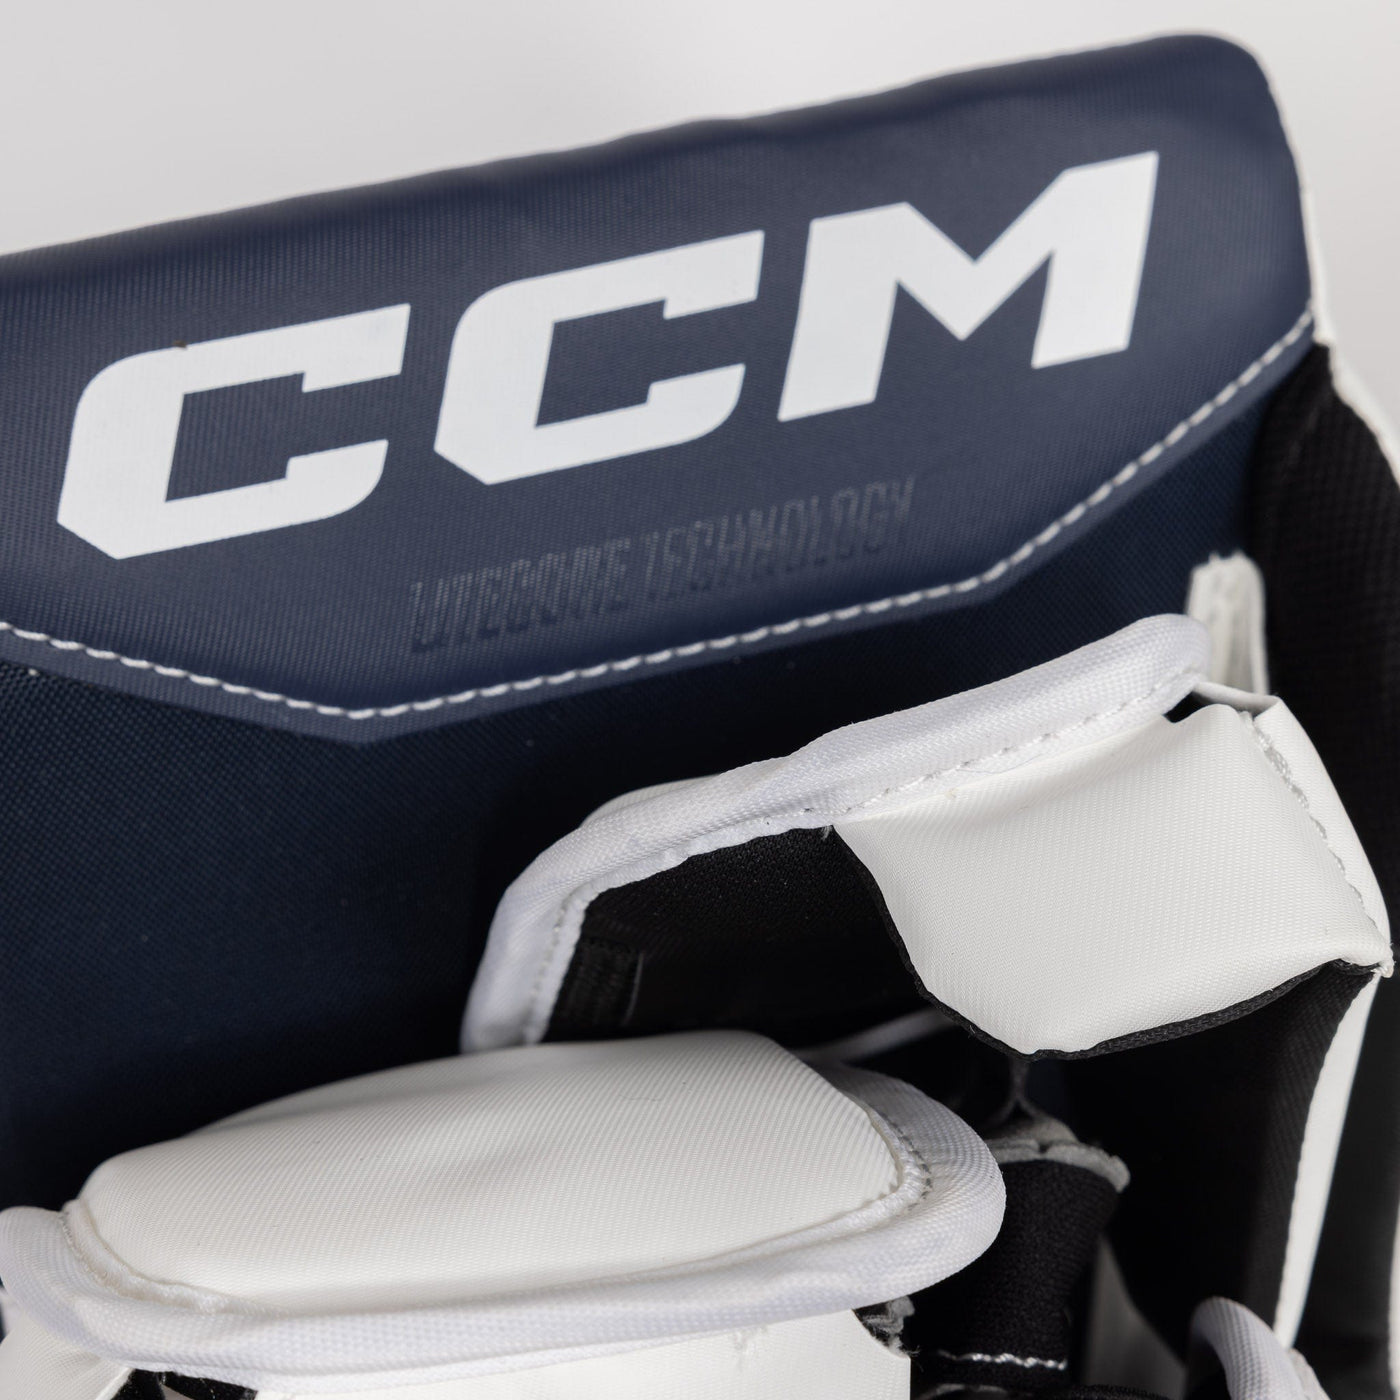 CCM Extreme Flex E6.5 Senior Goalie Blocker - Source Exclusive - The Hockey Shop Source For Sports